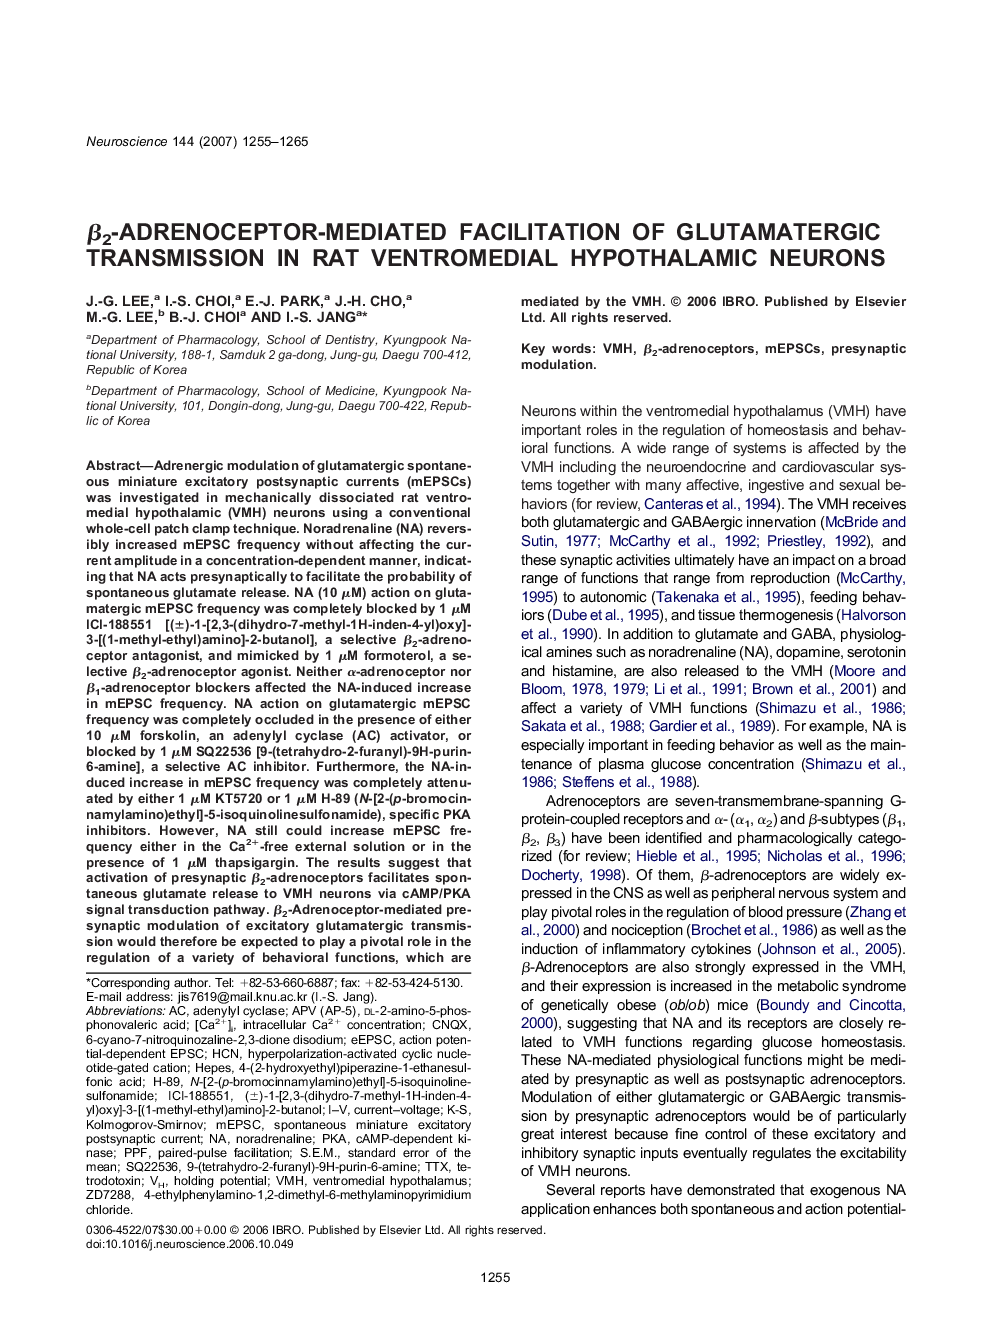 Î²2-adrenoceptor-mediated facilitation of glutamatergic transmission in rat ventromedial hypothalamic neurons